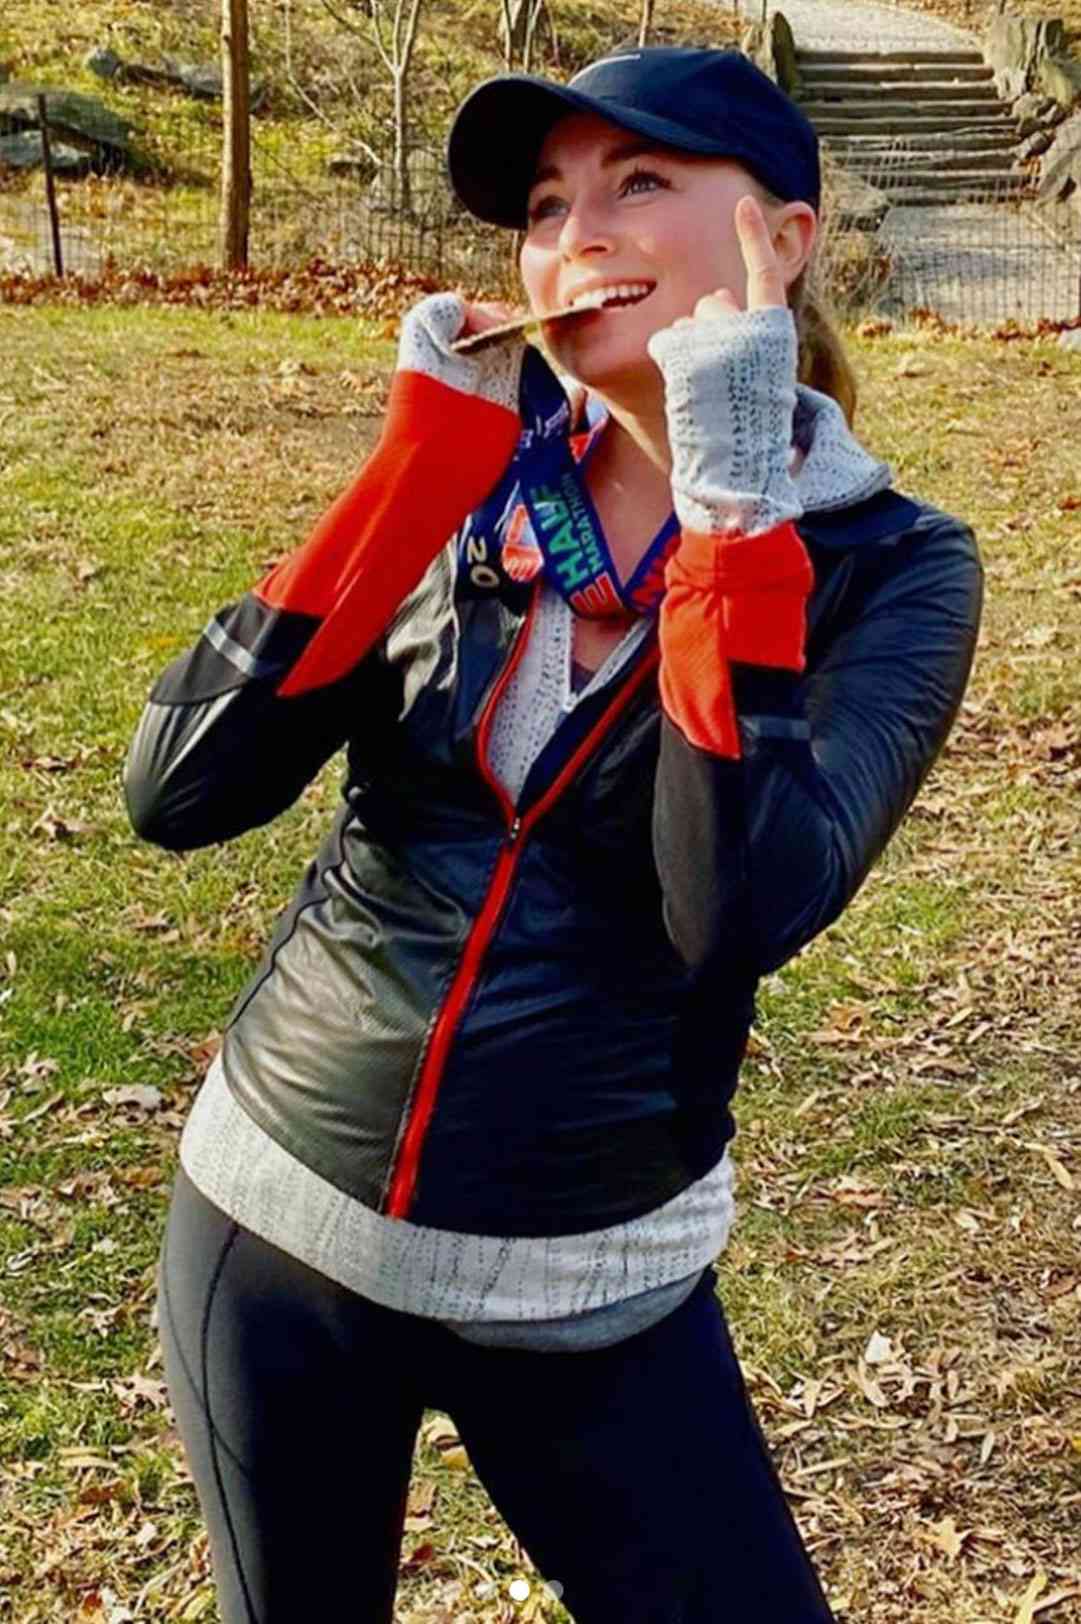 Ellie With Half Marathon Medal